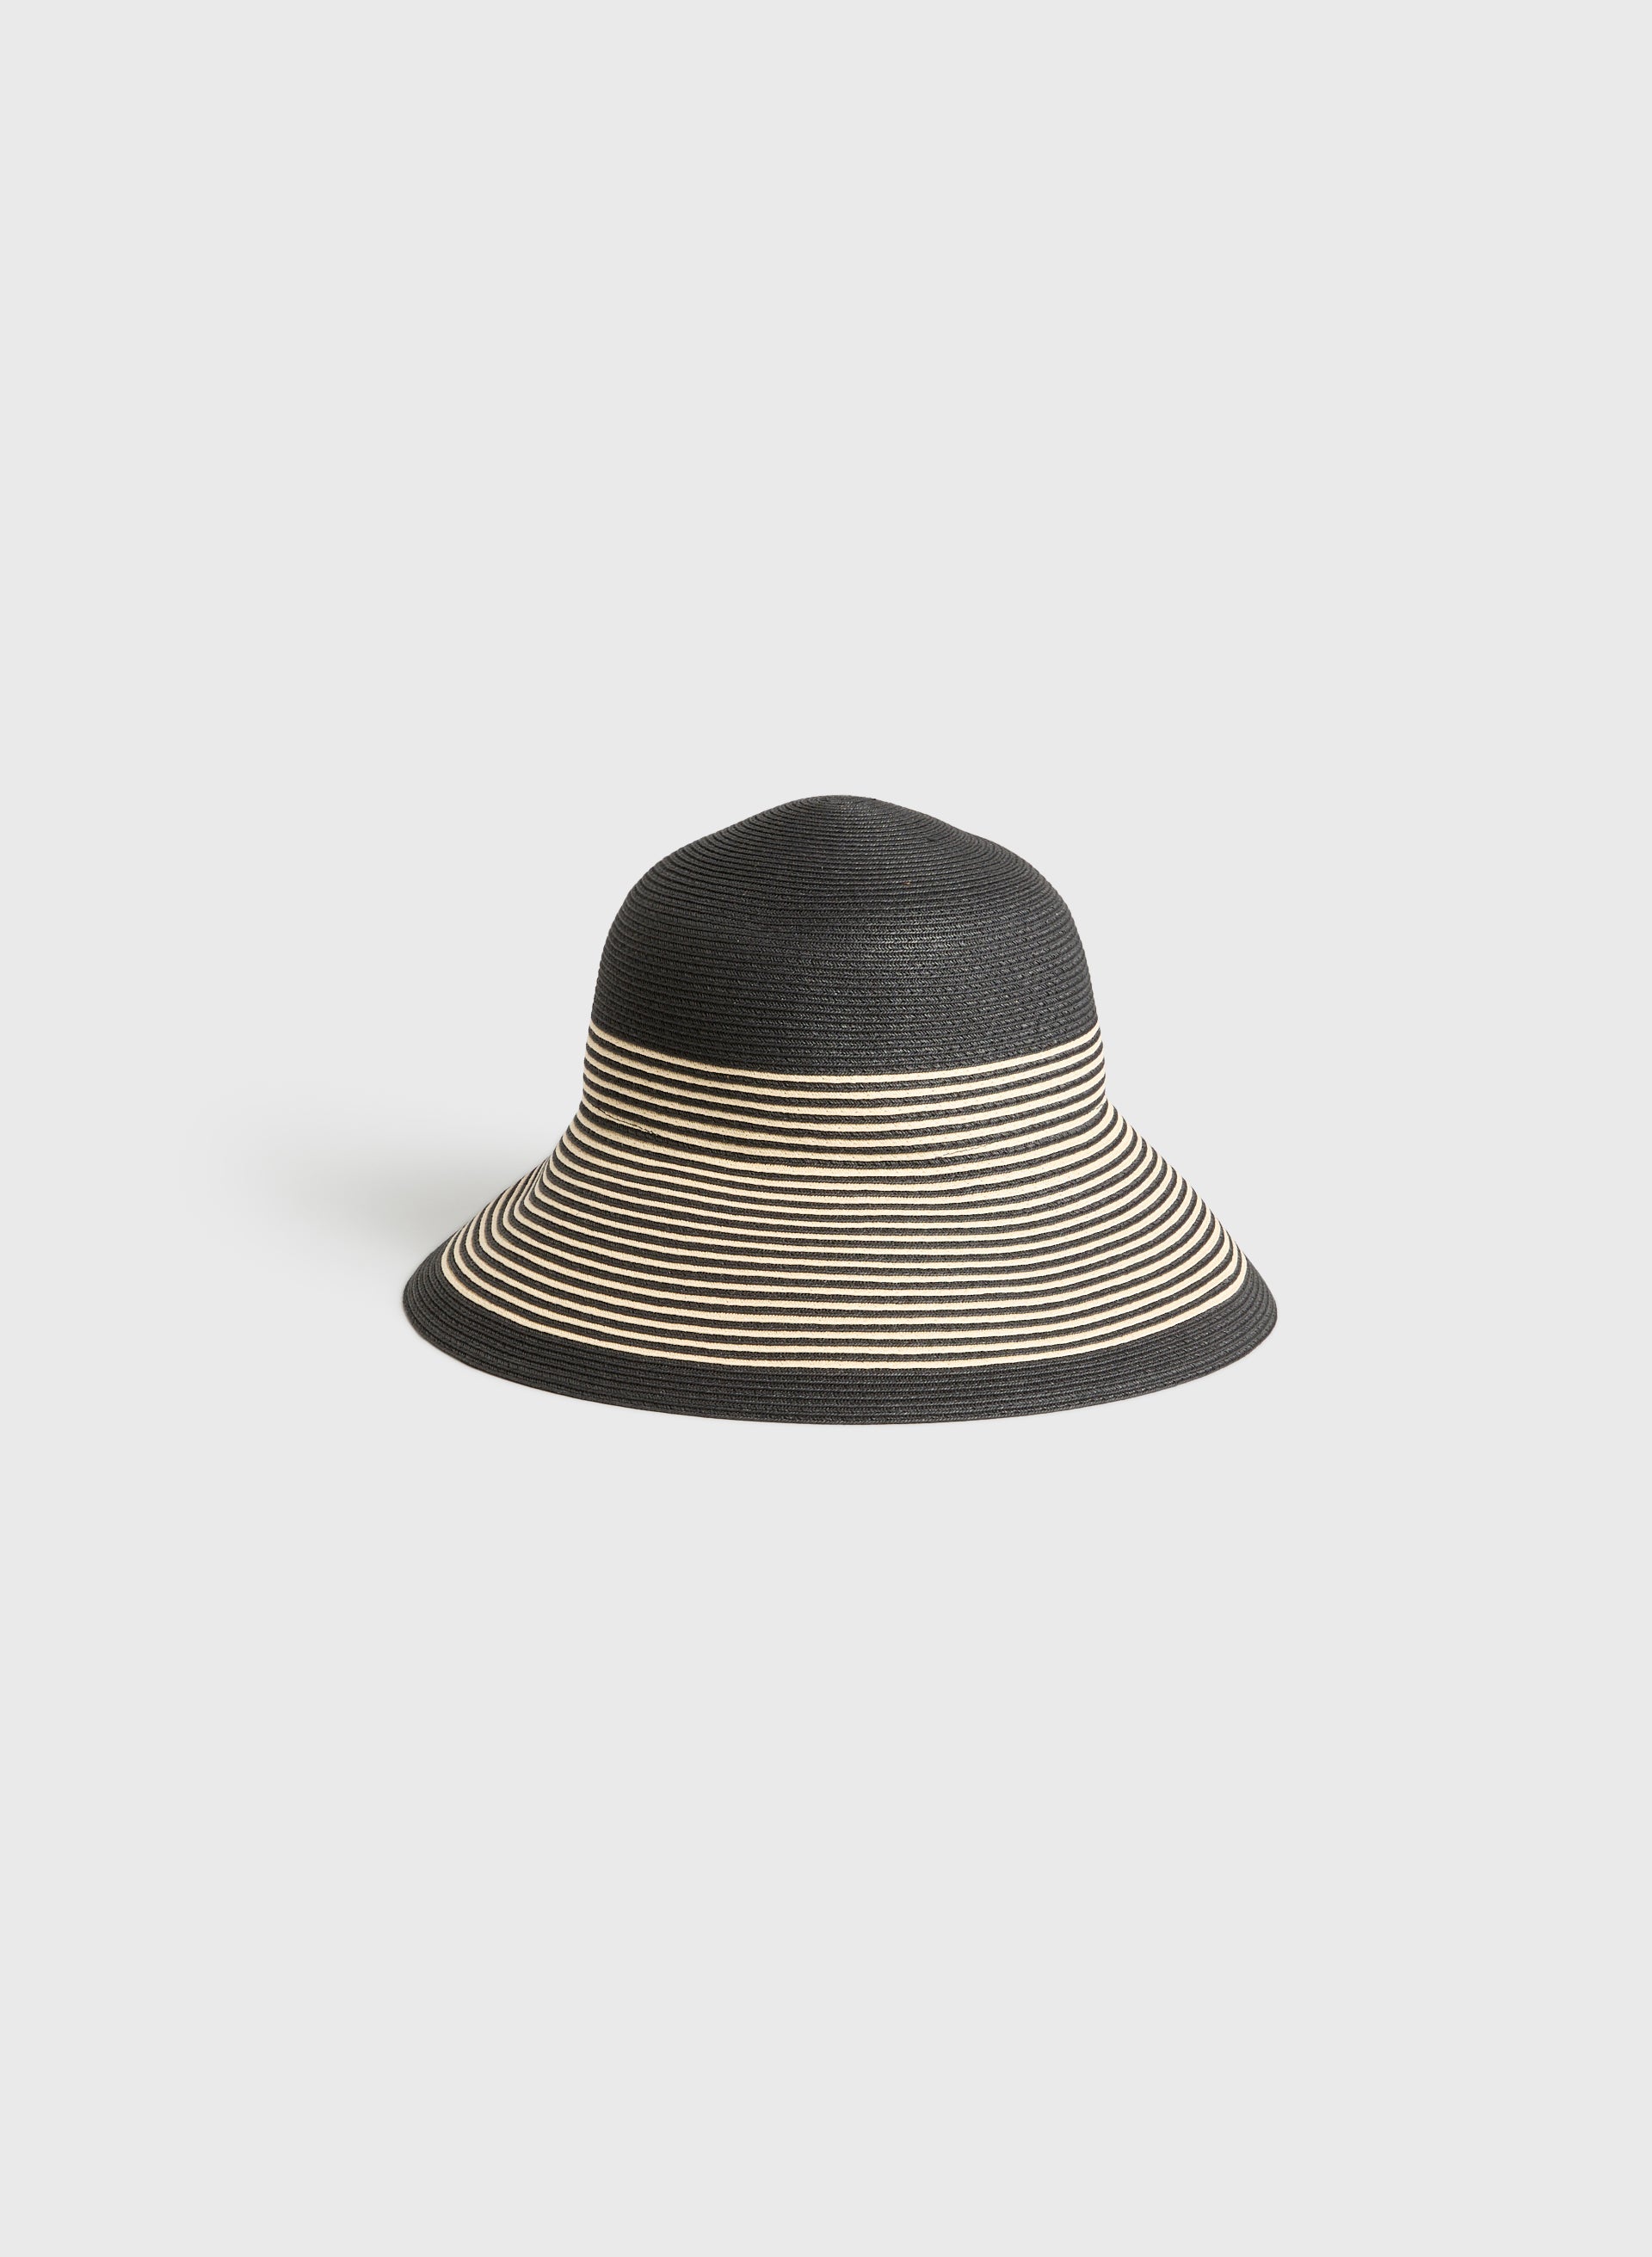 Two-Tone Straw Cloche Hat